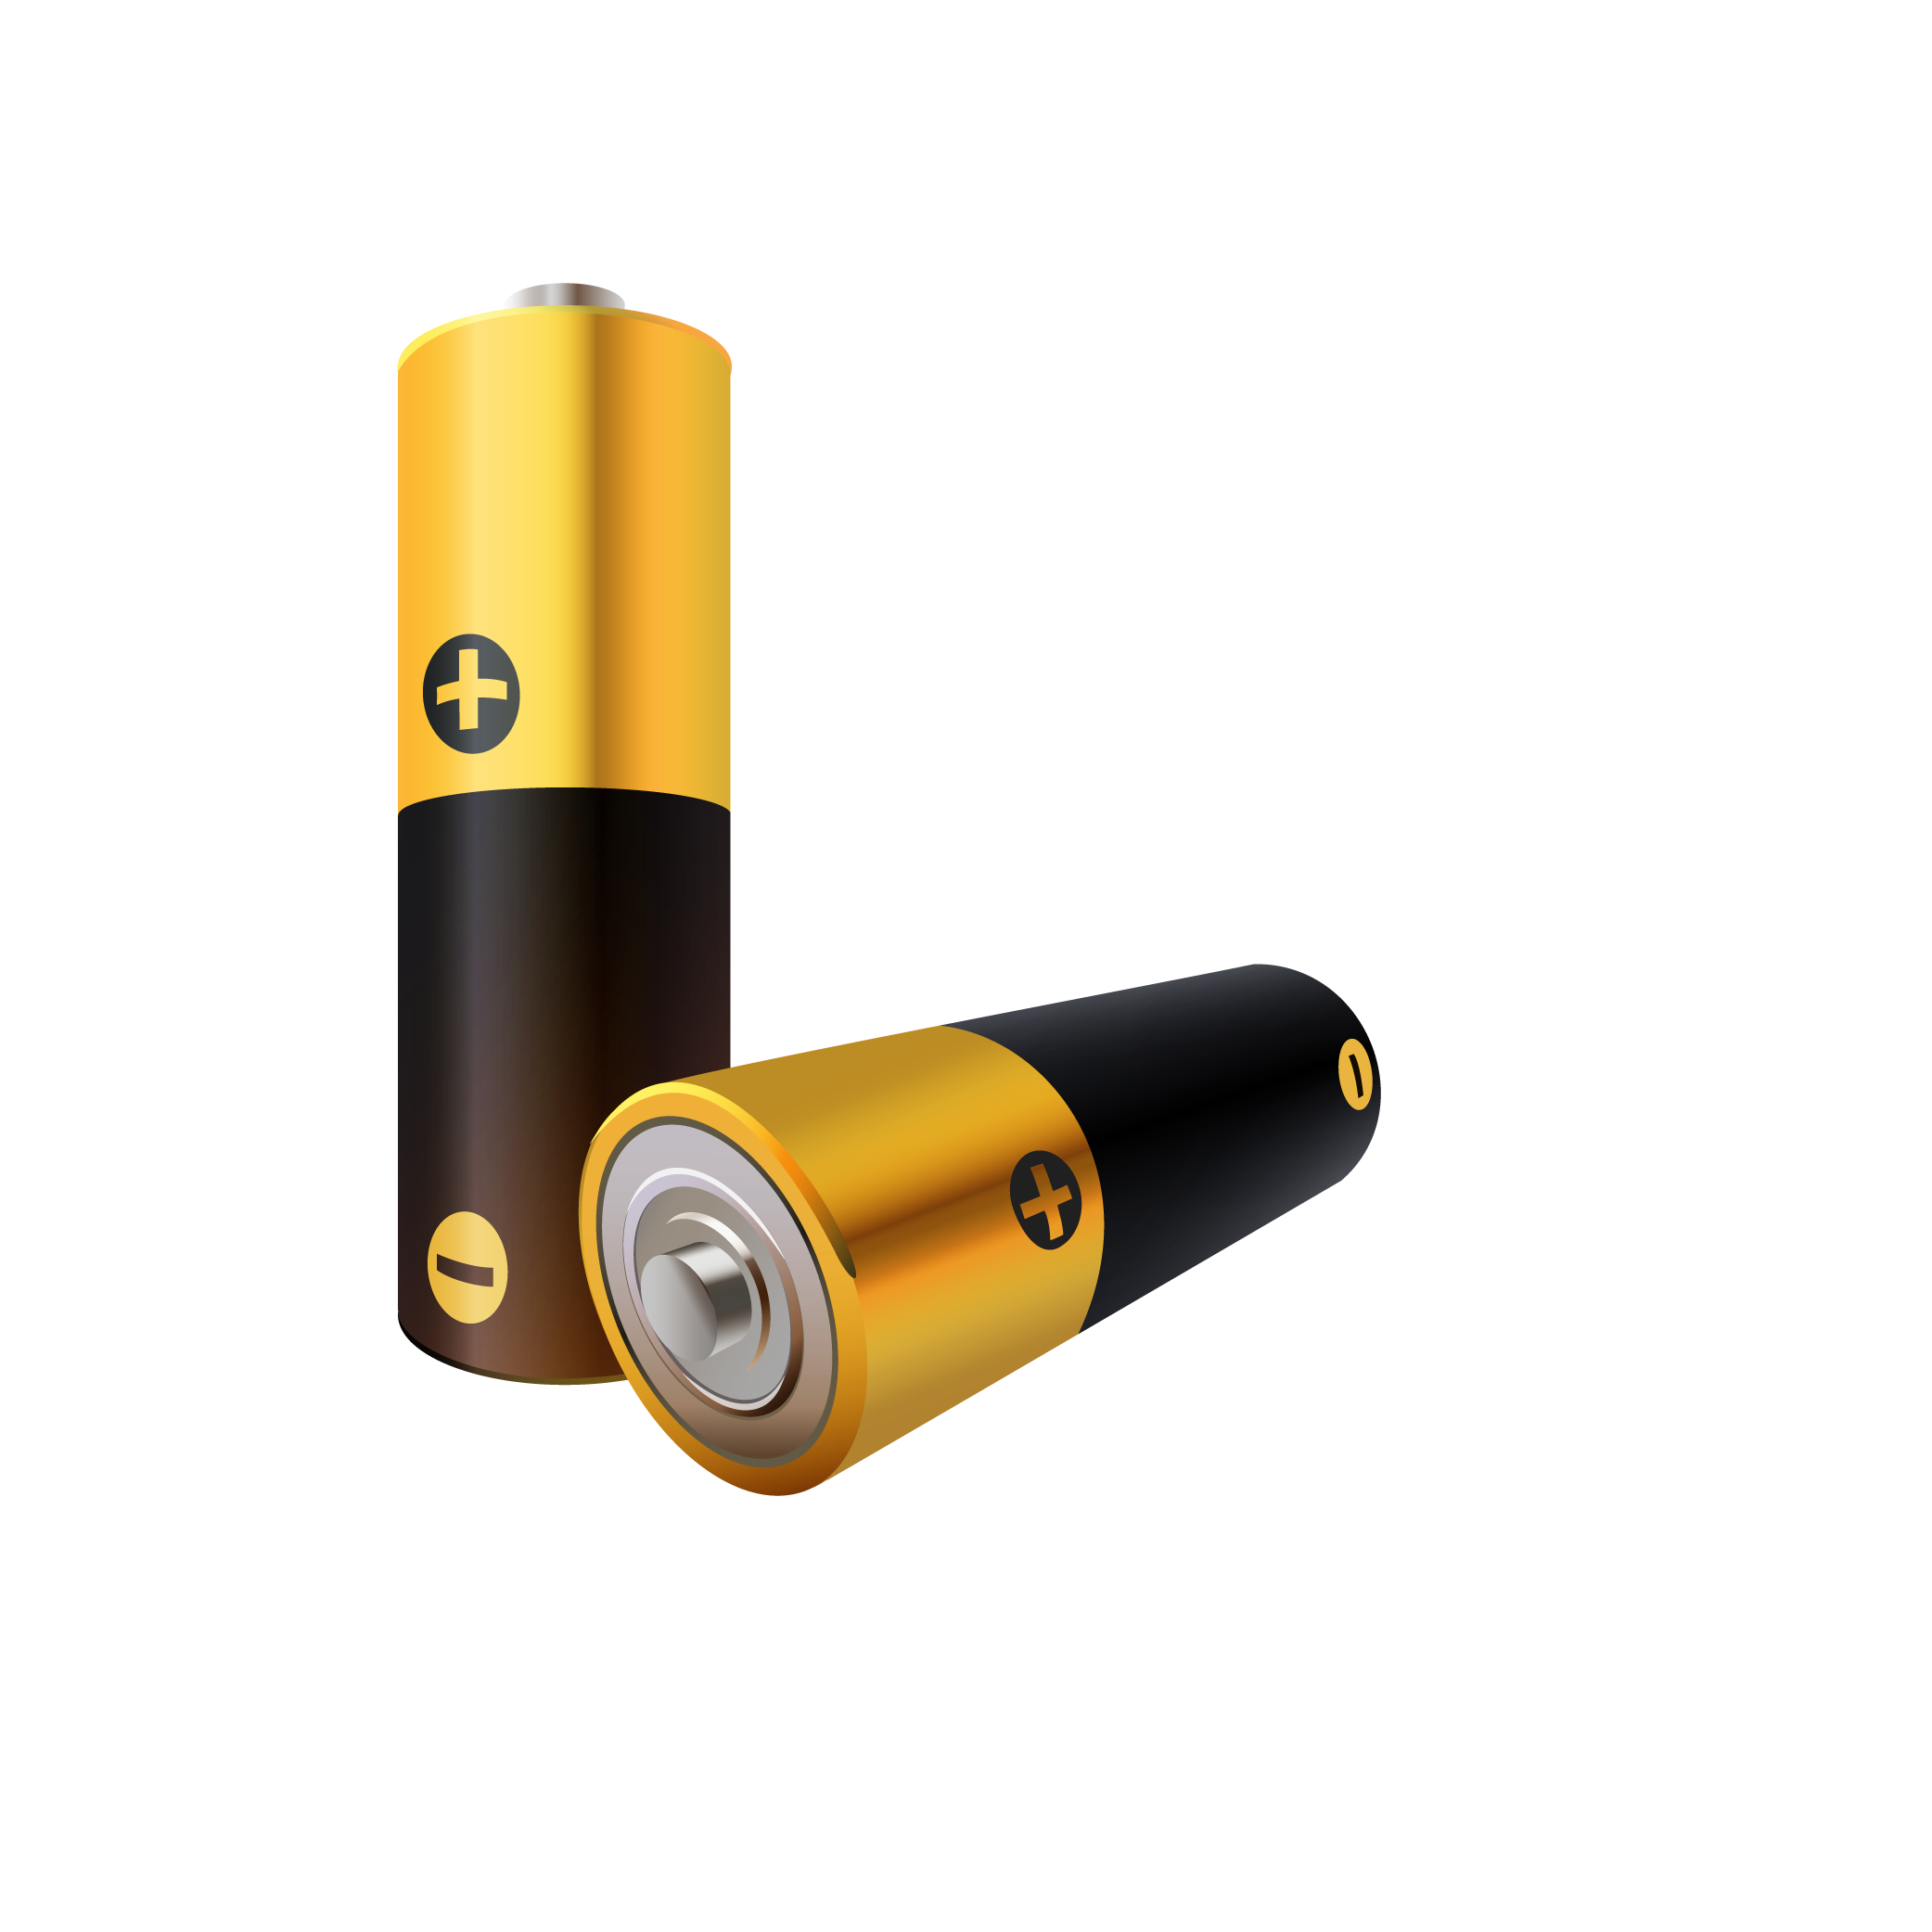 Batterie-schematisch-Pixabay-Dreamer21.png